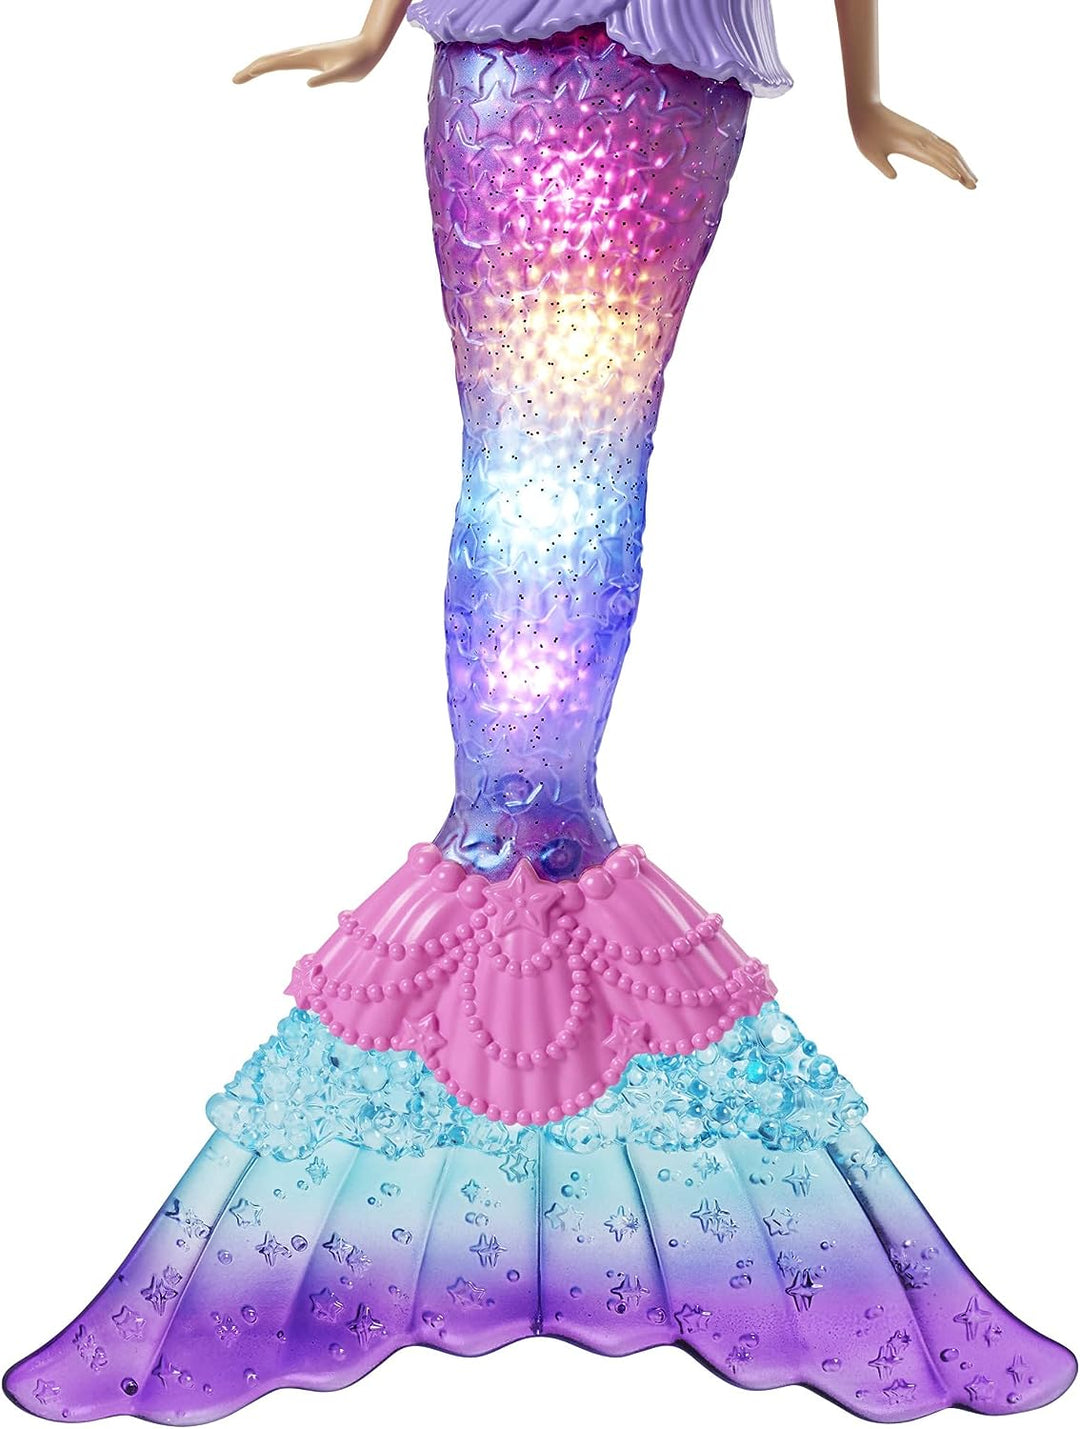 Barbie Dreamtopia Twinkle Lights Meerjungfrau-Puppe mit Leuchtfunktion, 3 bis 7 Jahre